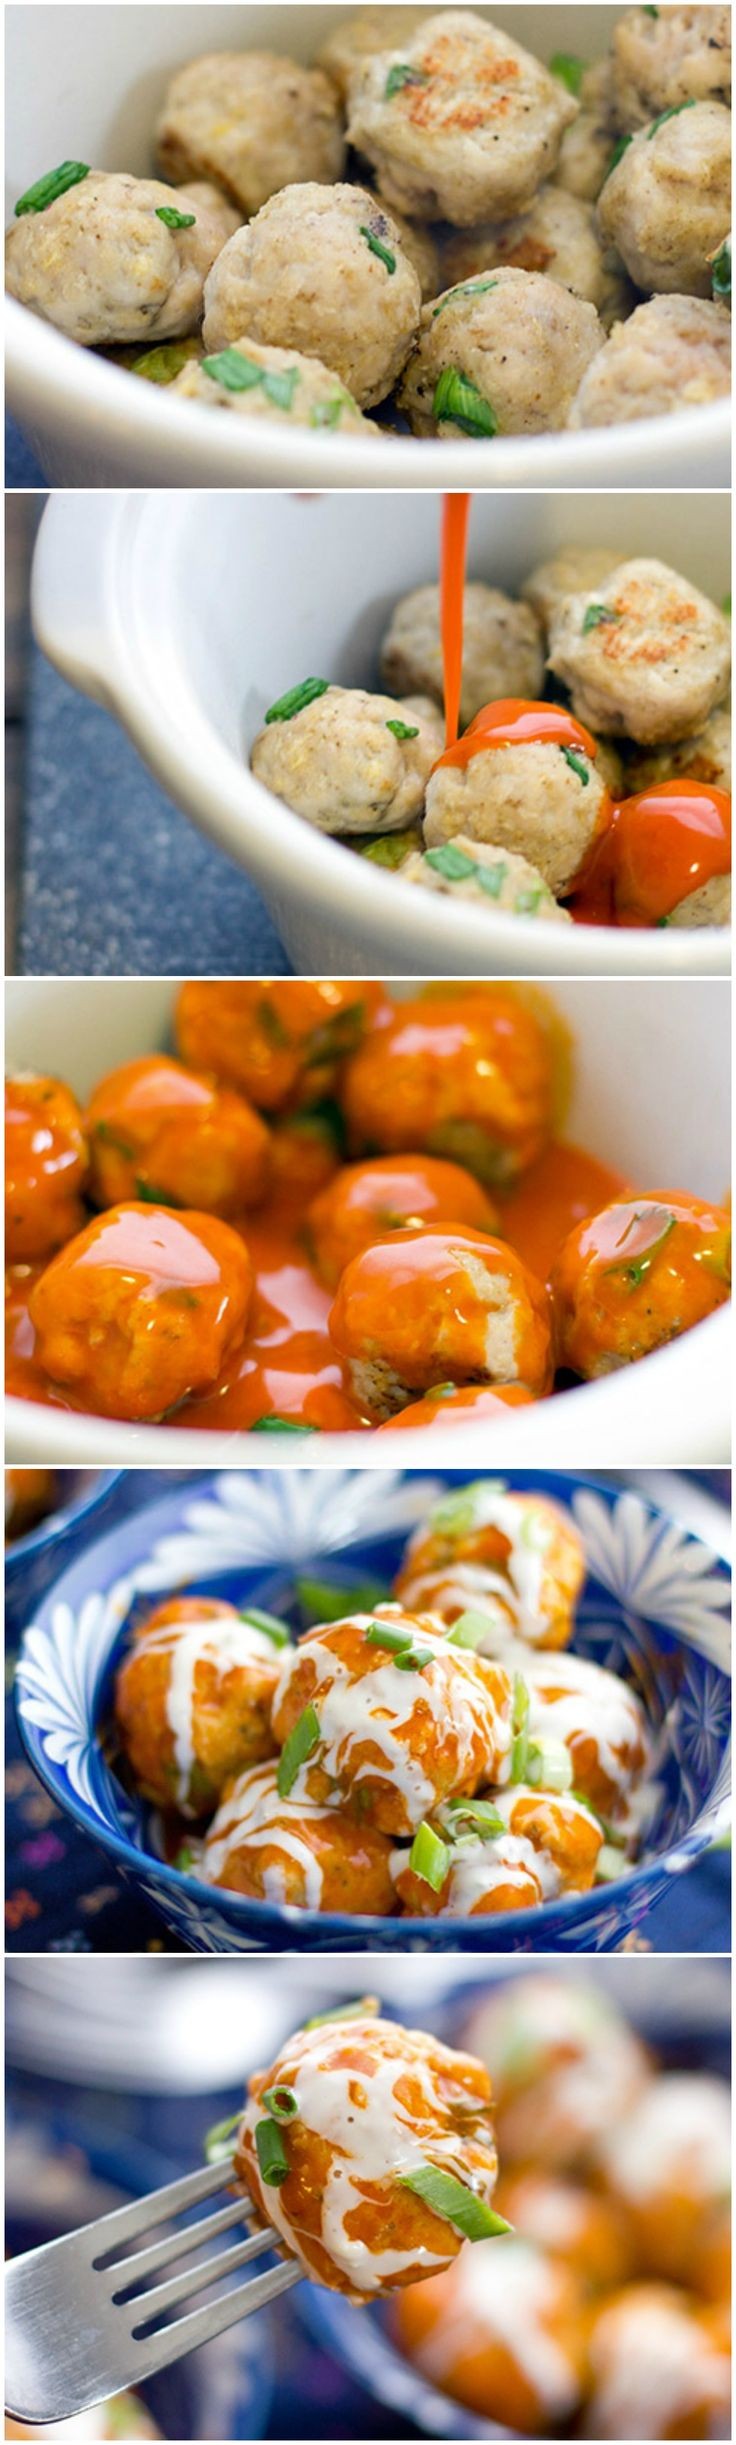 Slow Cooker Buffalo Chicken Meatballs ~ This recip...